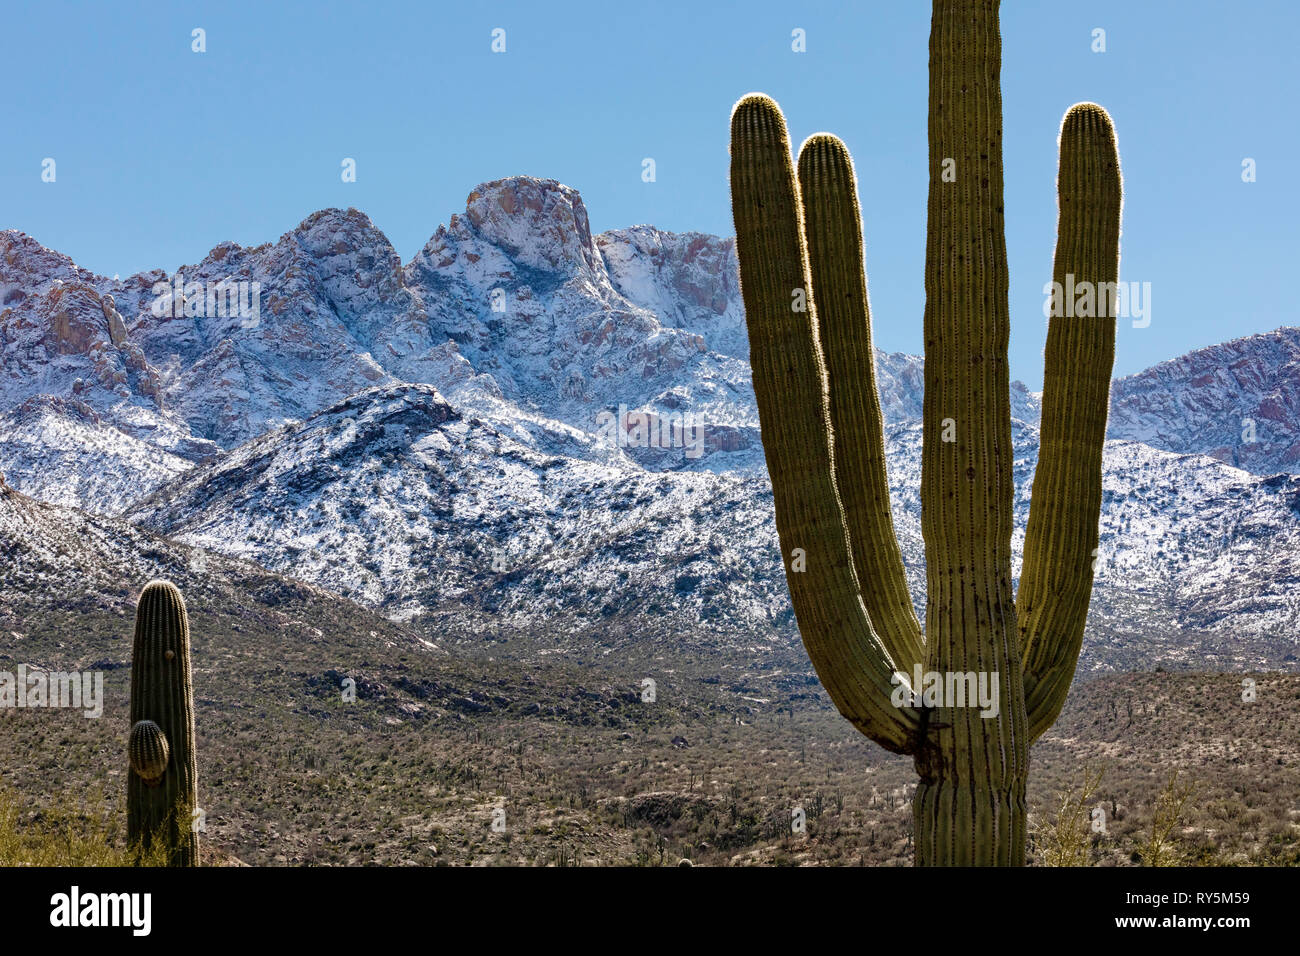 Fresh snowfall on Pusch Ridge, Catalina State Park, Tucson, Arizona, Giant Saguaro Cactus (Carnegiea gigantea) in foreground. Stock Photo